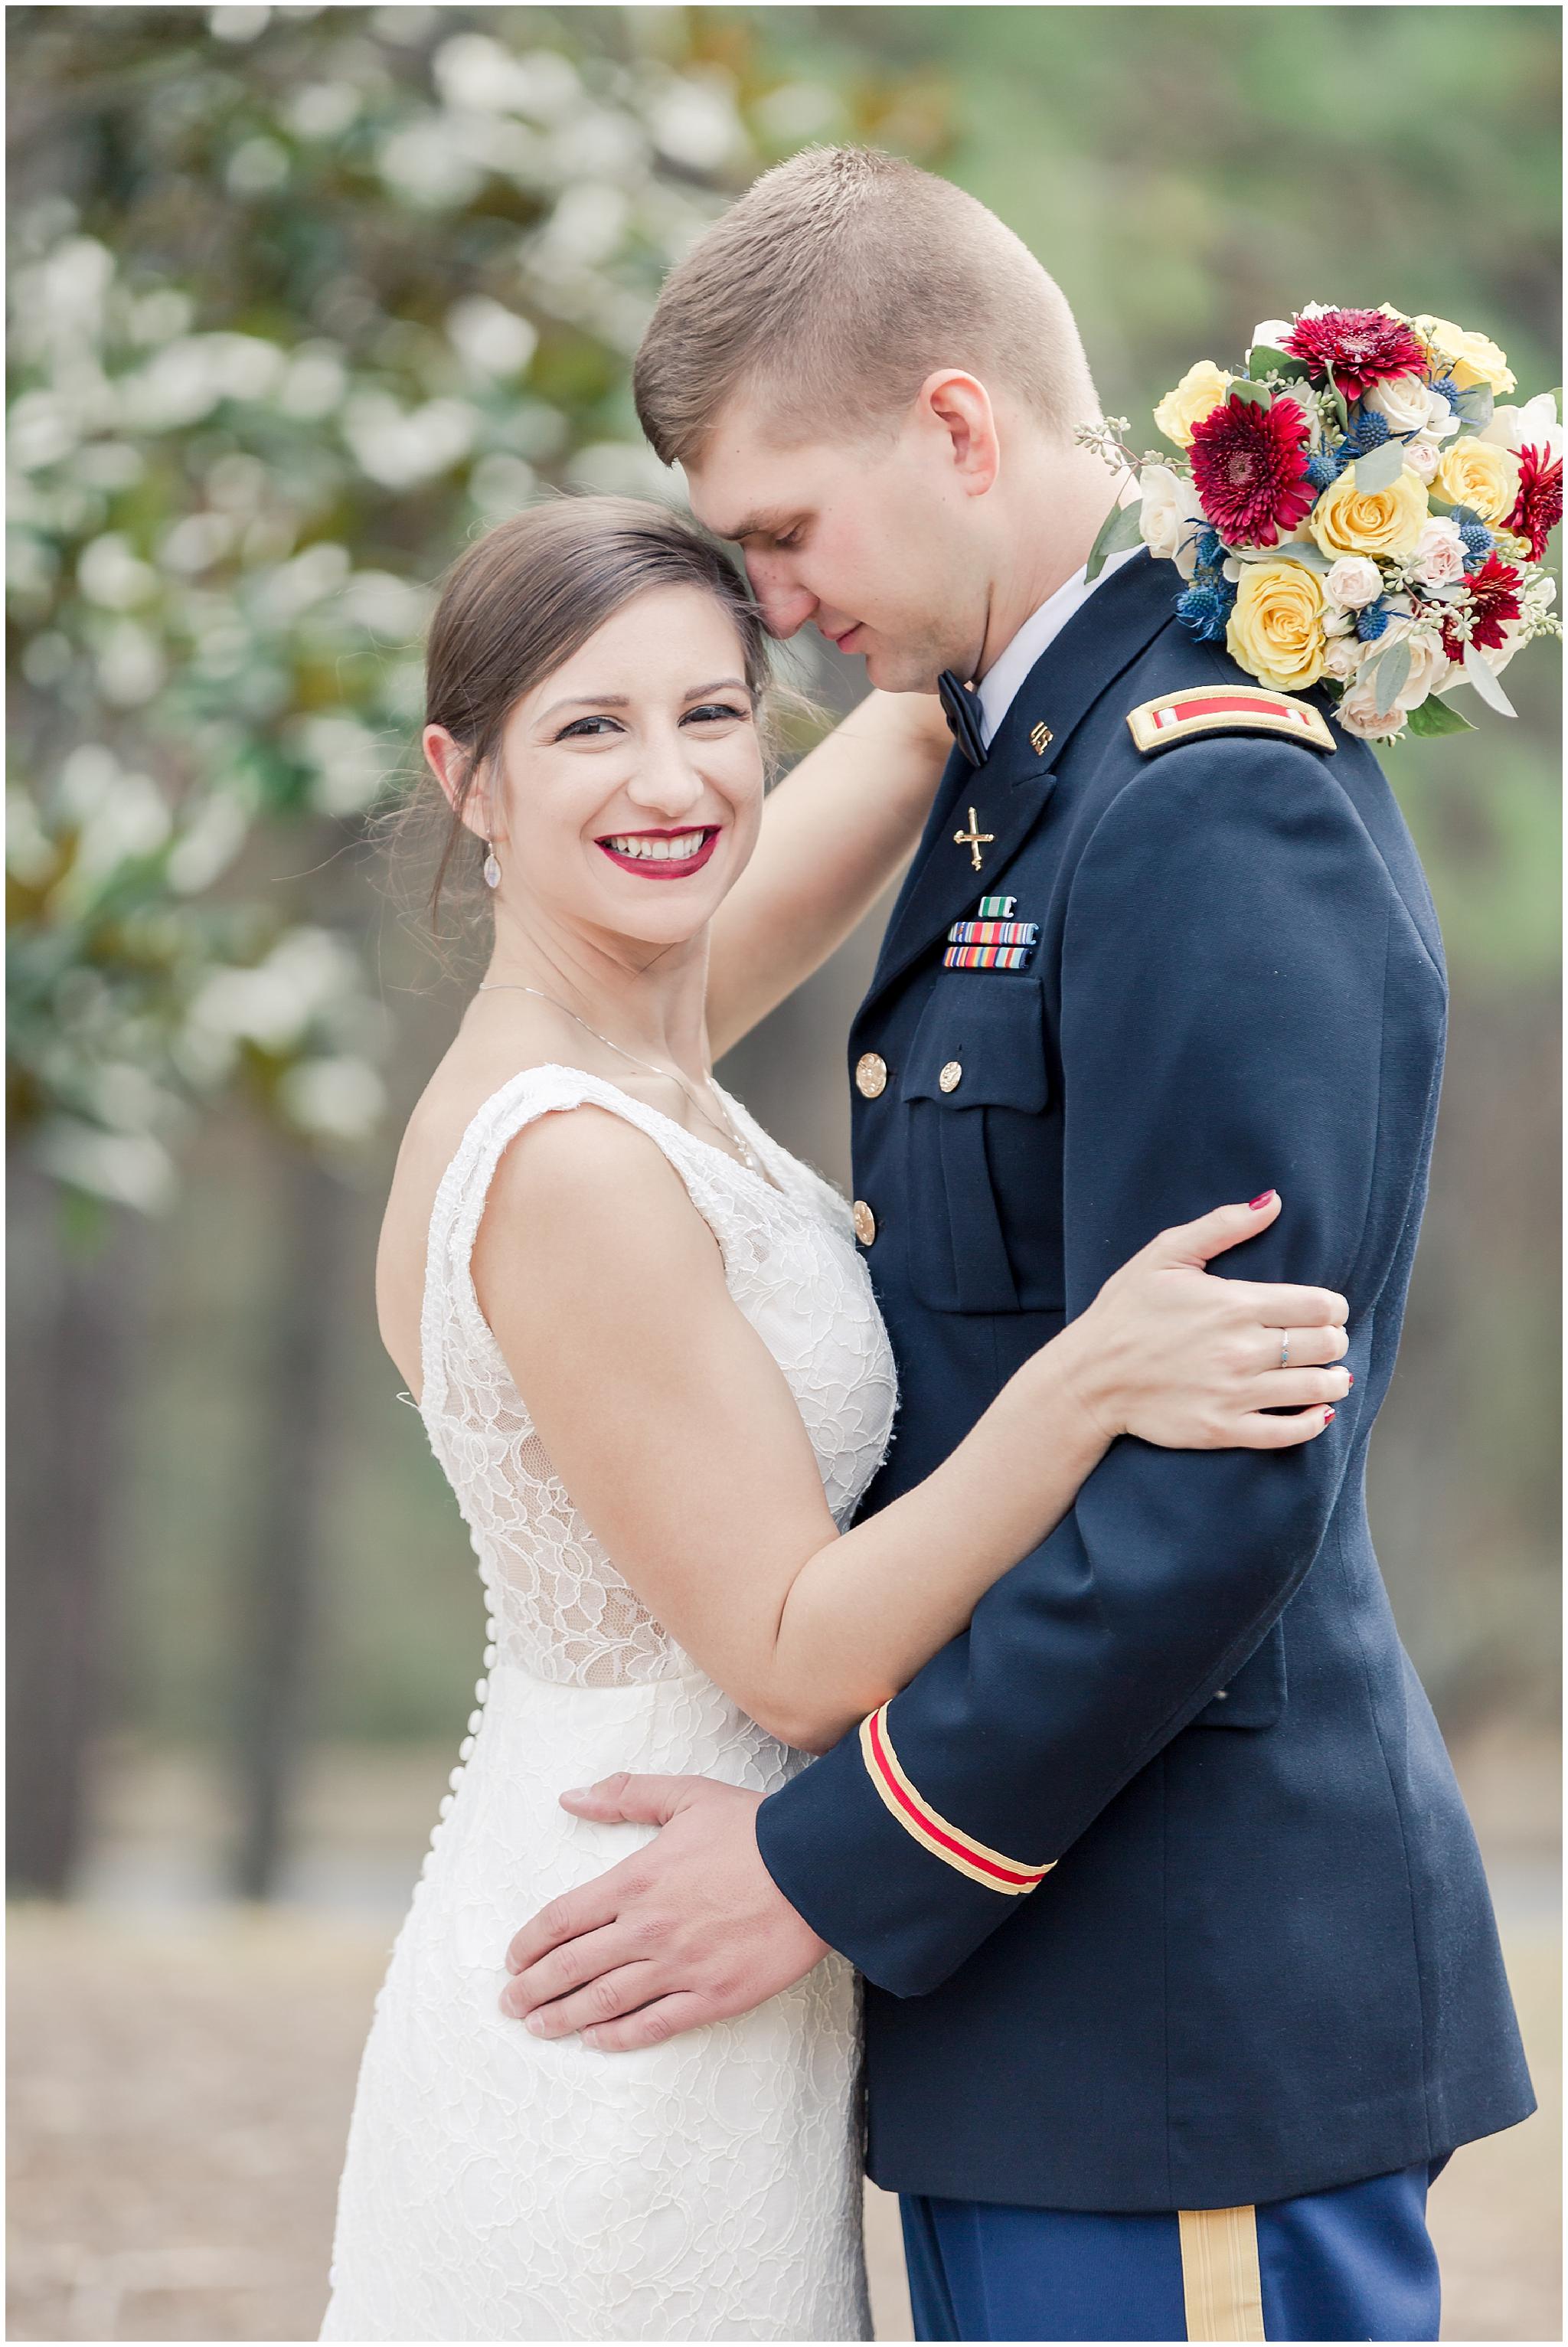 Military wedding photographers in atlanta georgia ga roswell mill club_0029.jpg